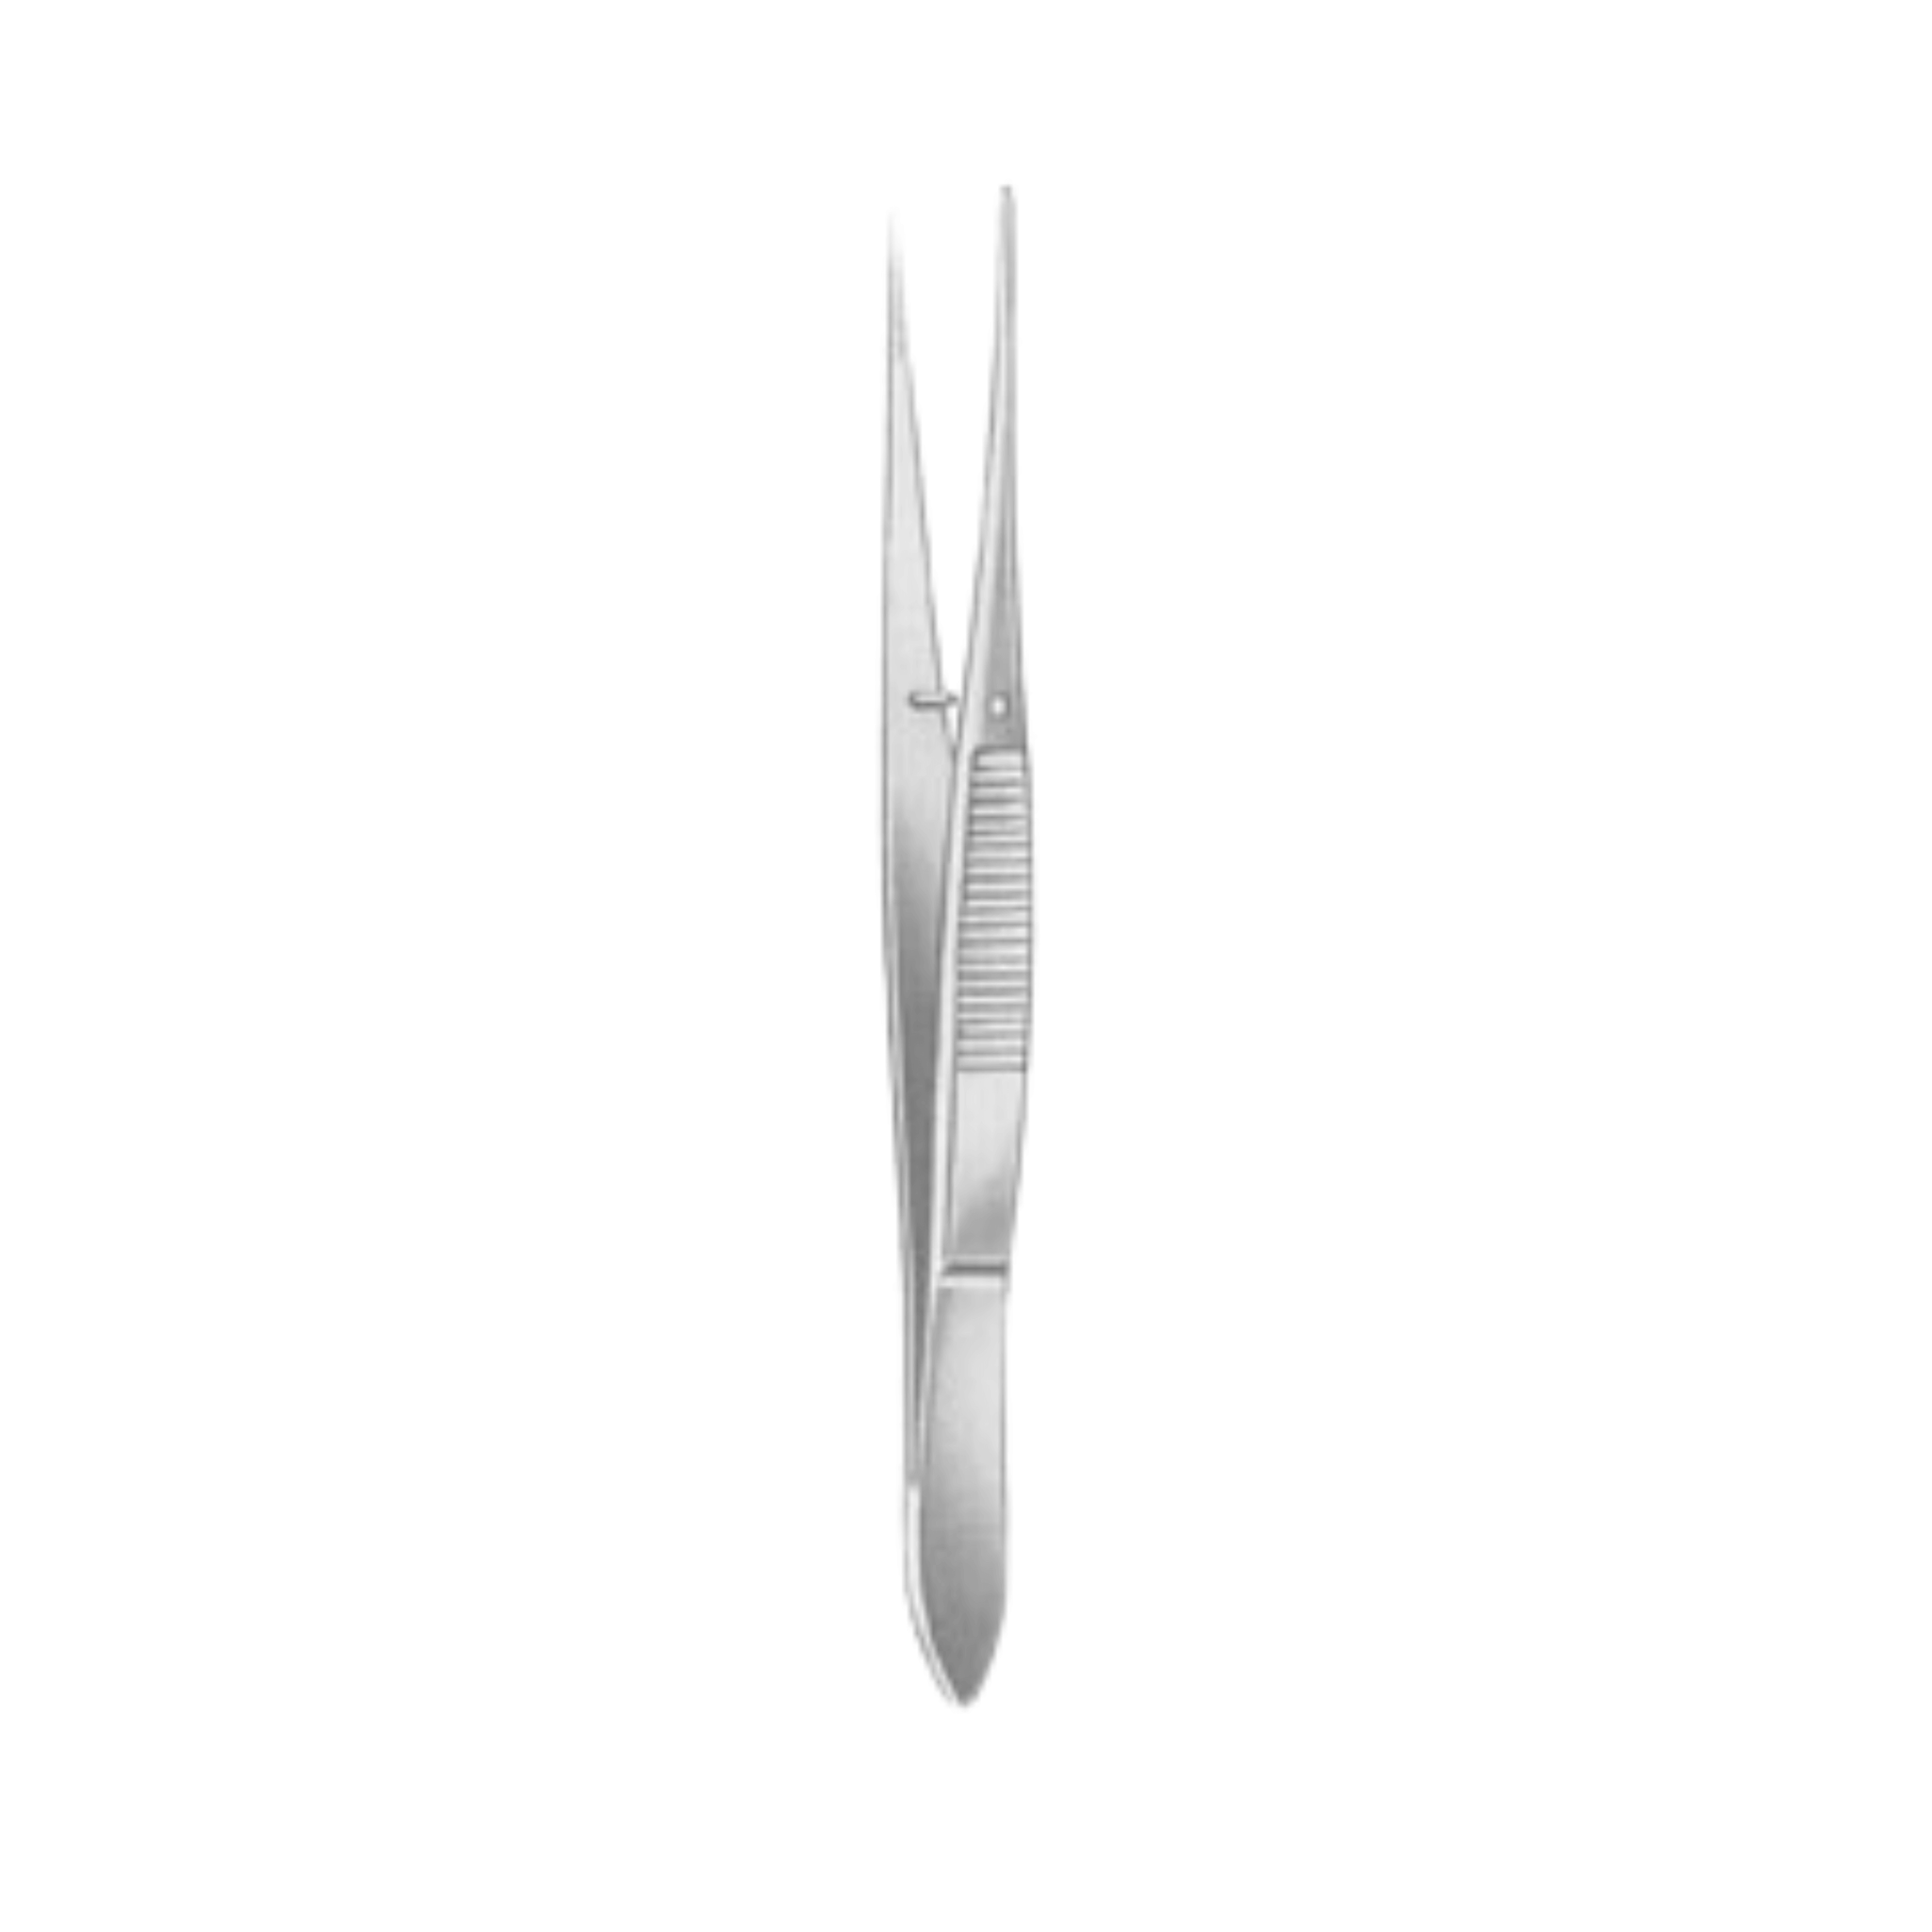 Graefe Iris Forceps- Curved, Serrated, 10 cm